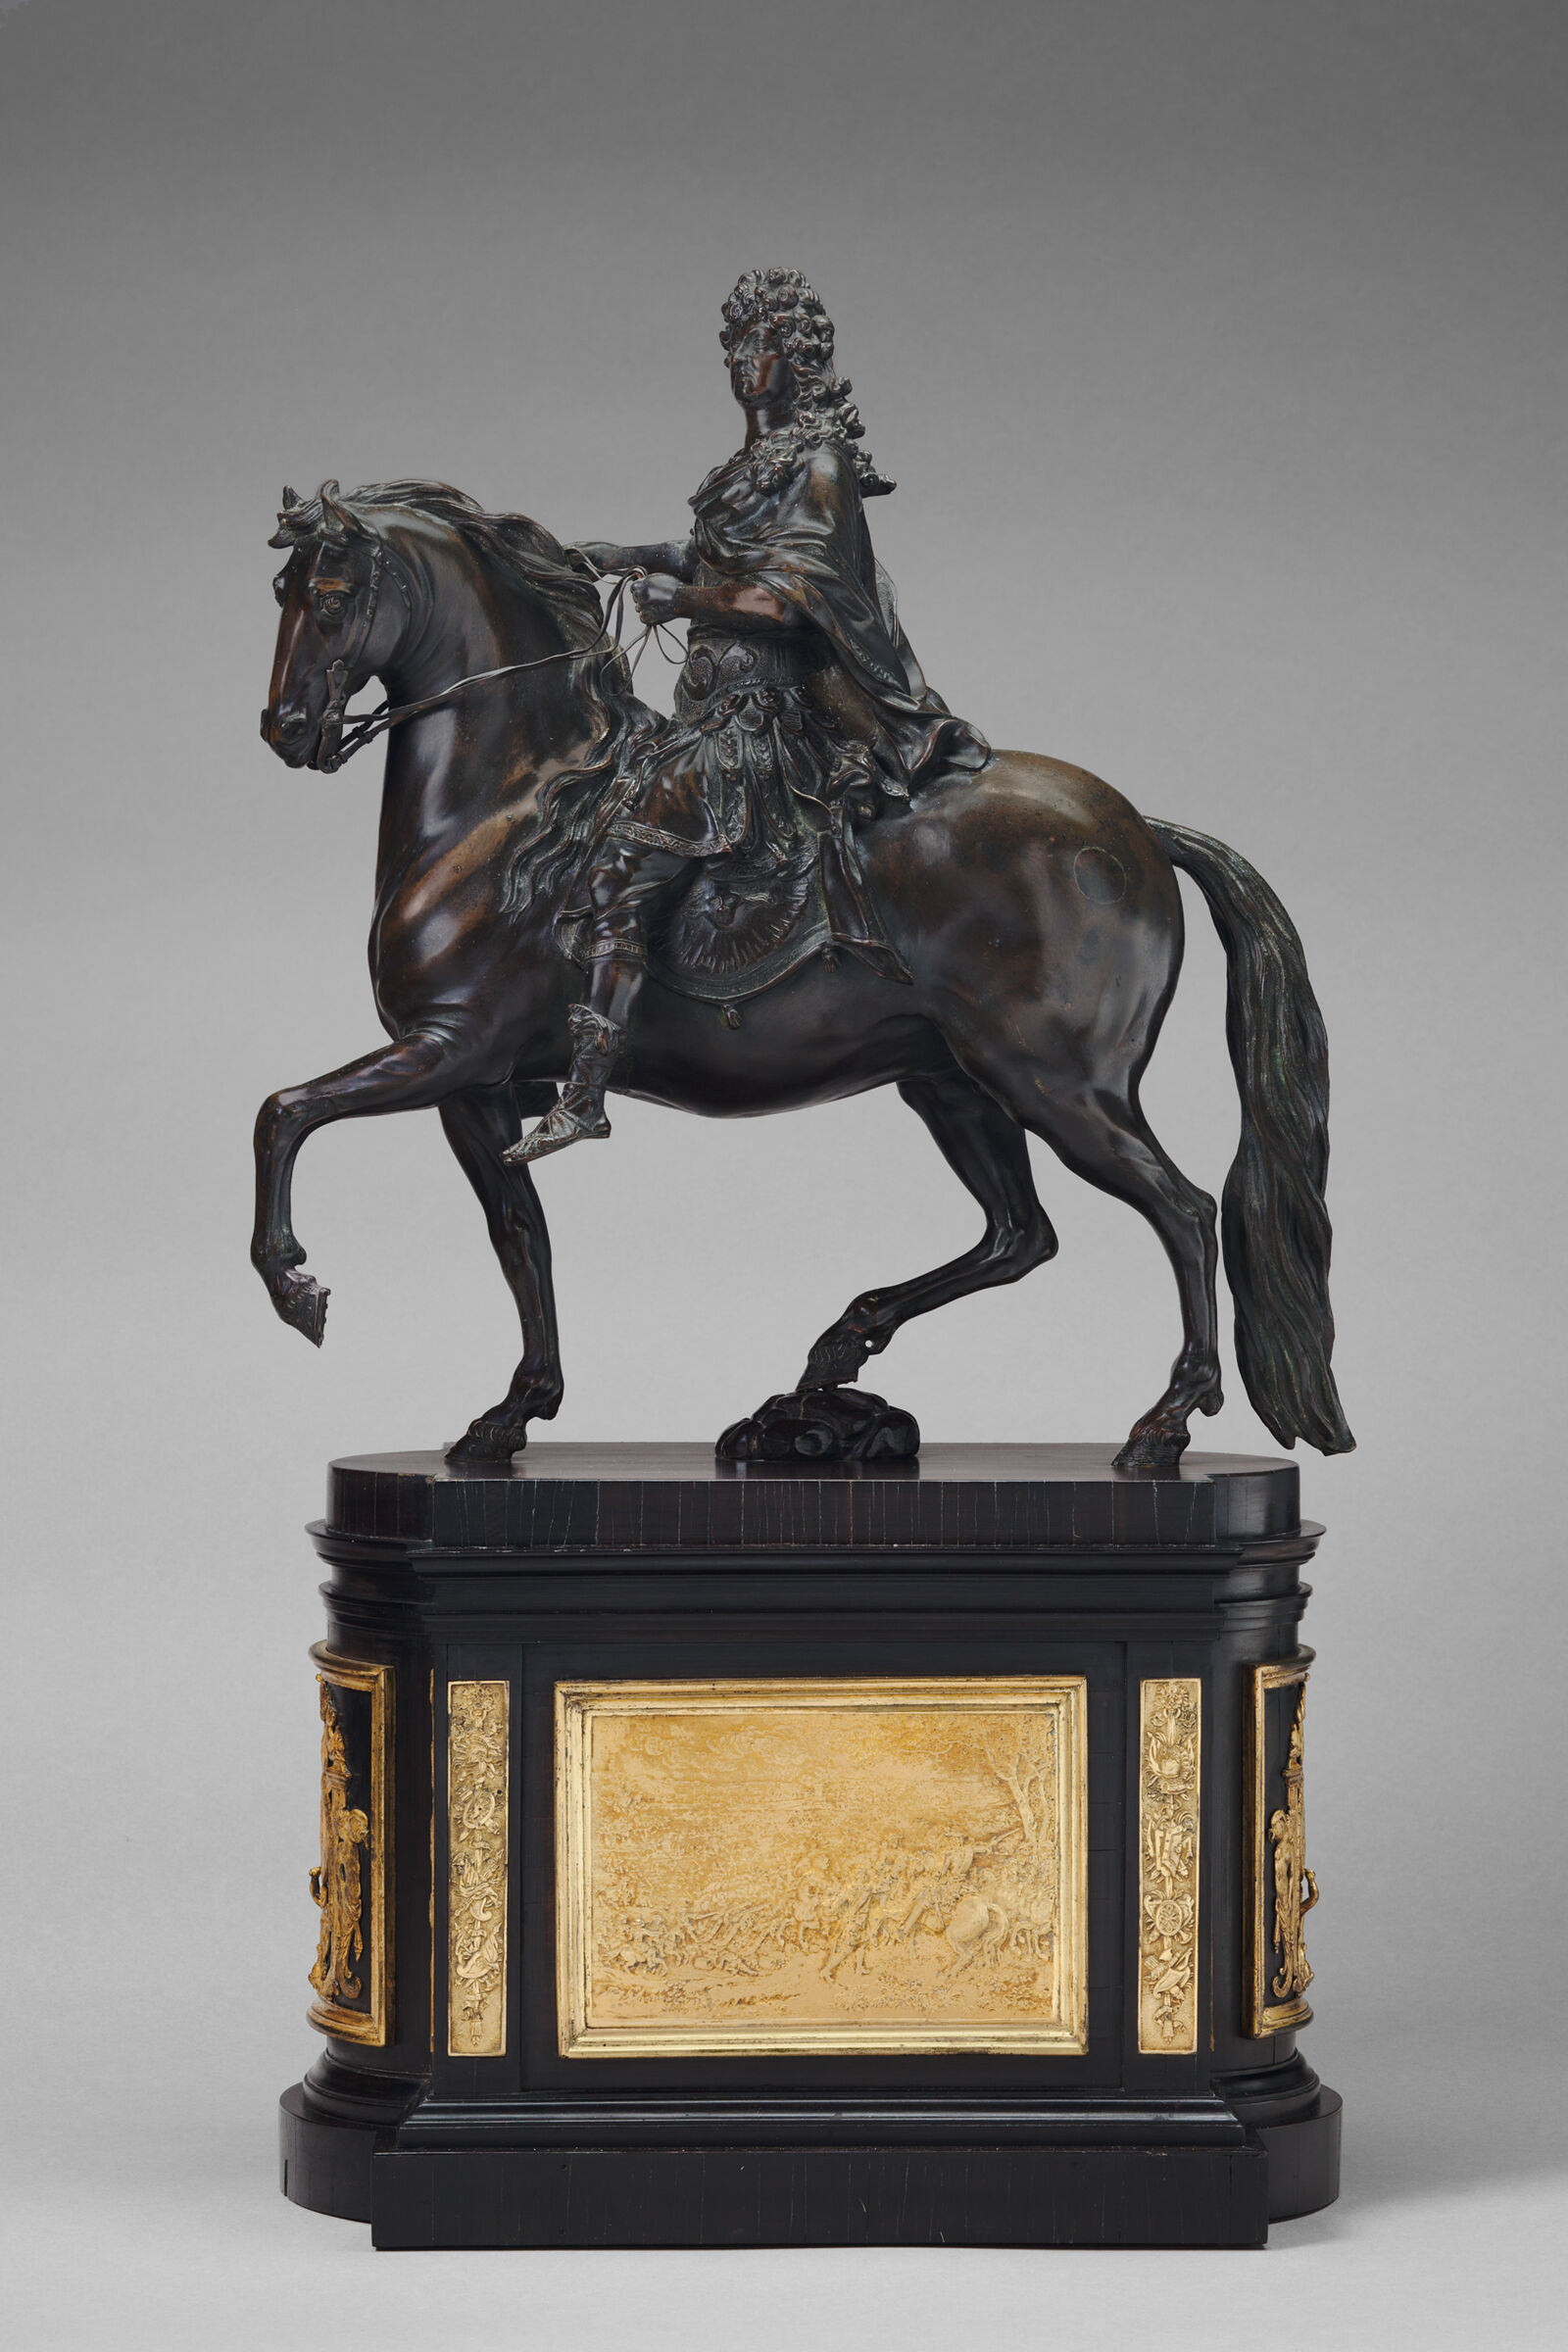 Equestrian Statue Of Louis Xiv (1638-1715)